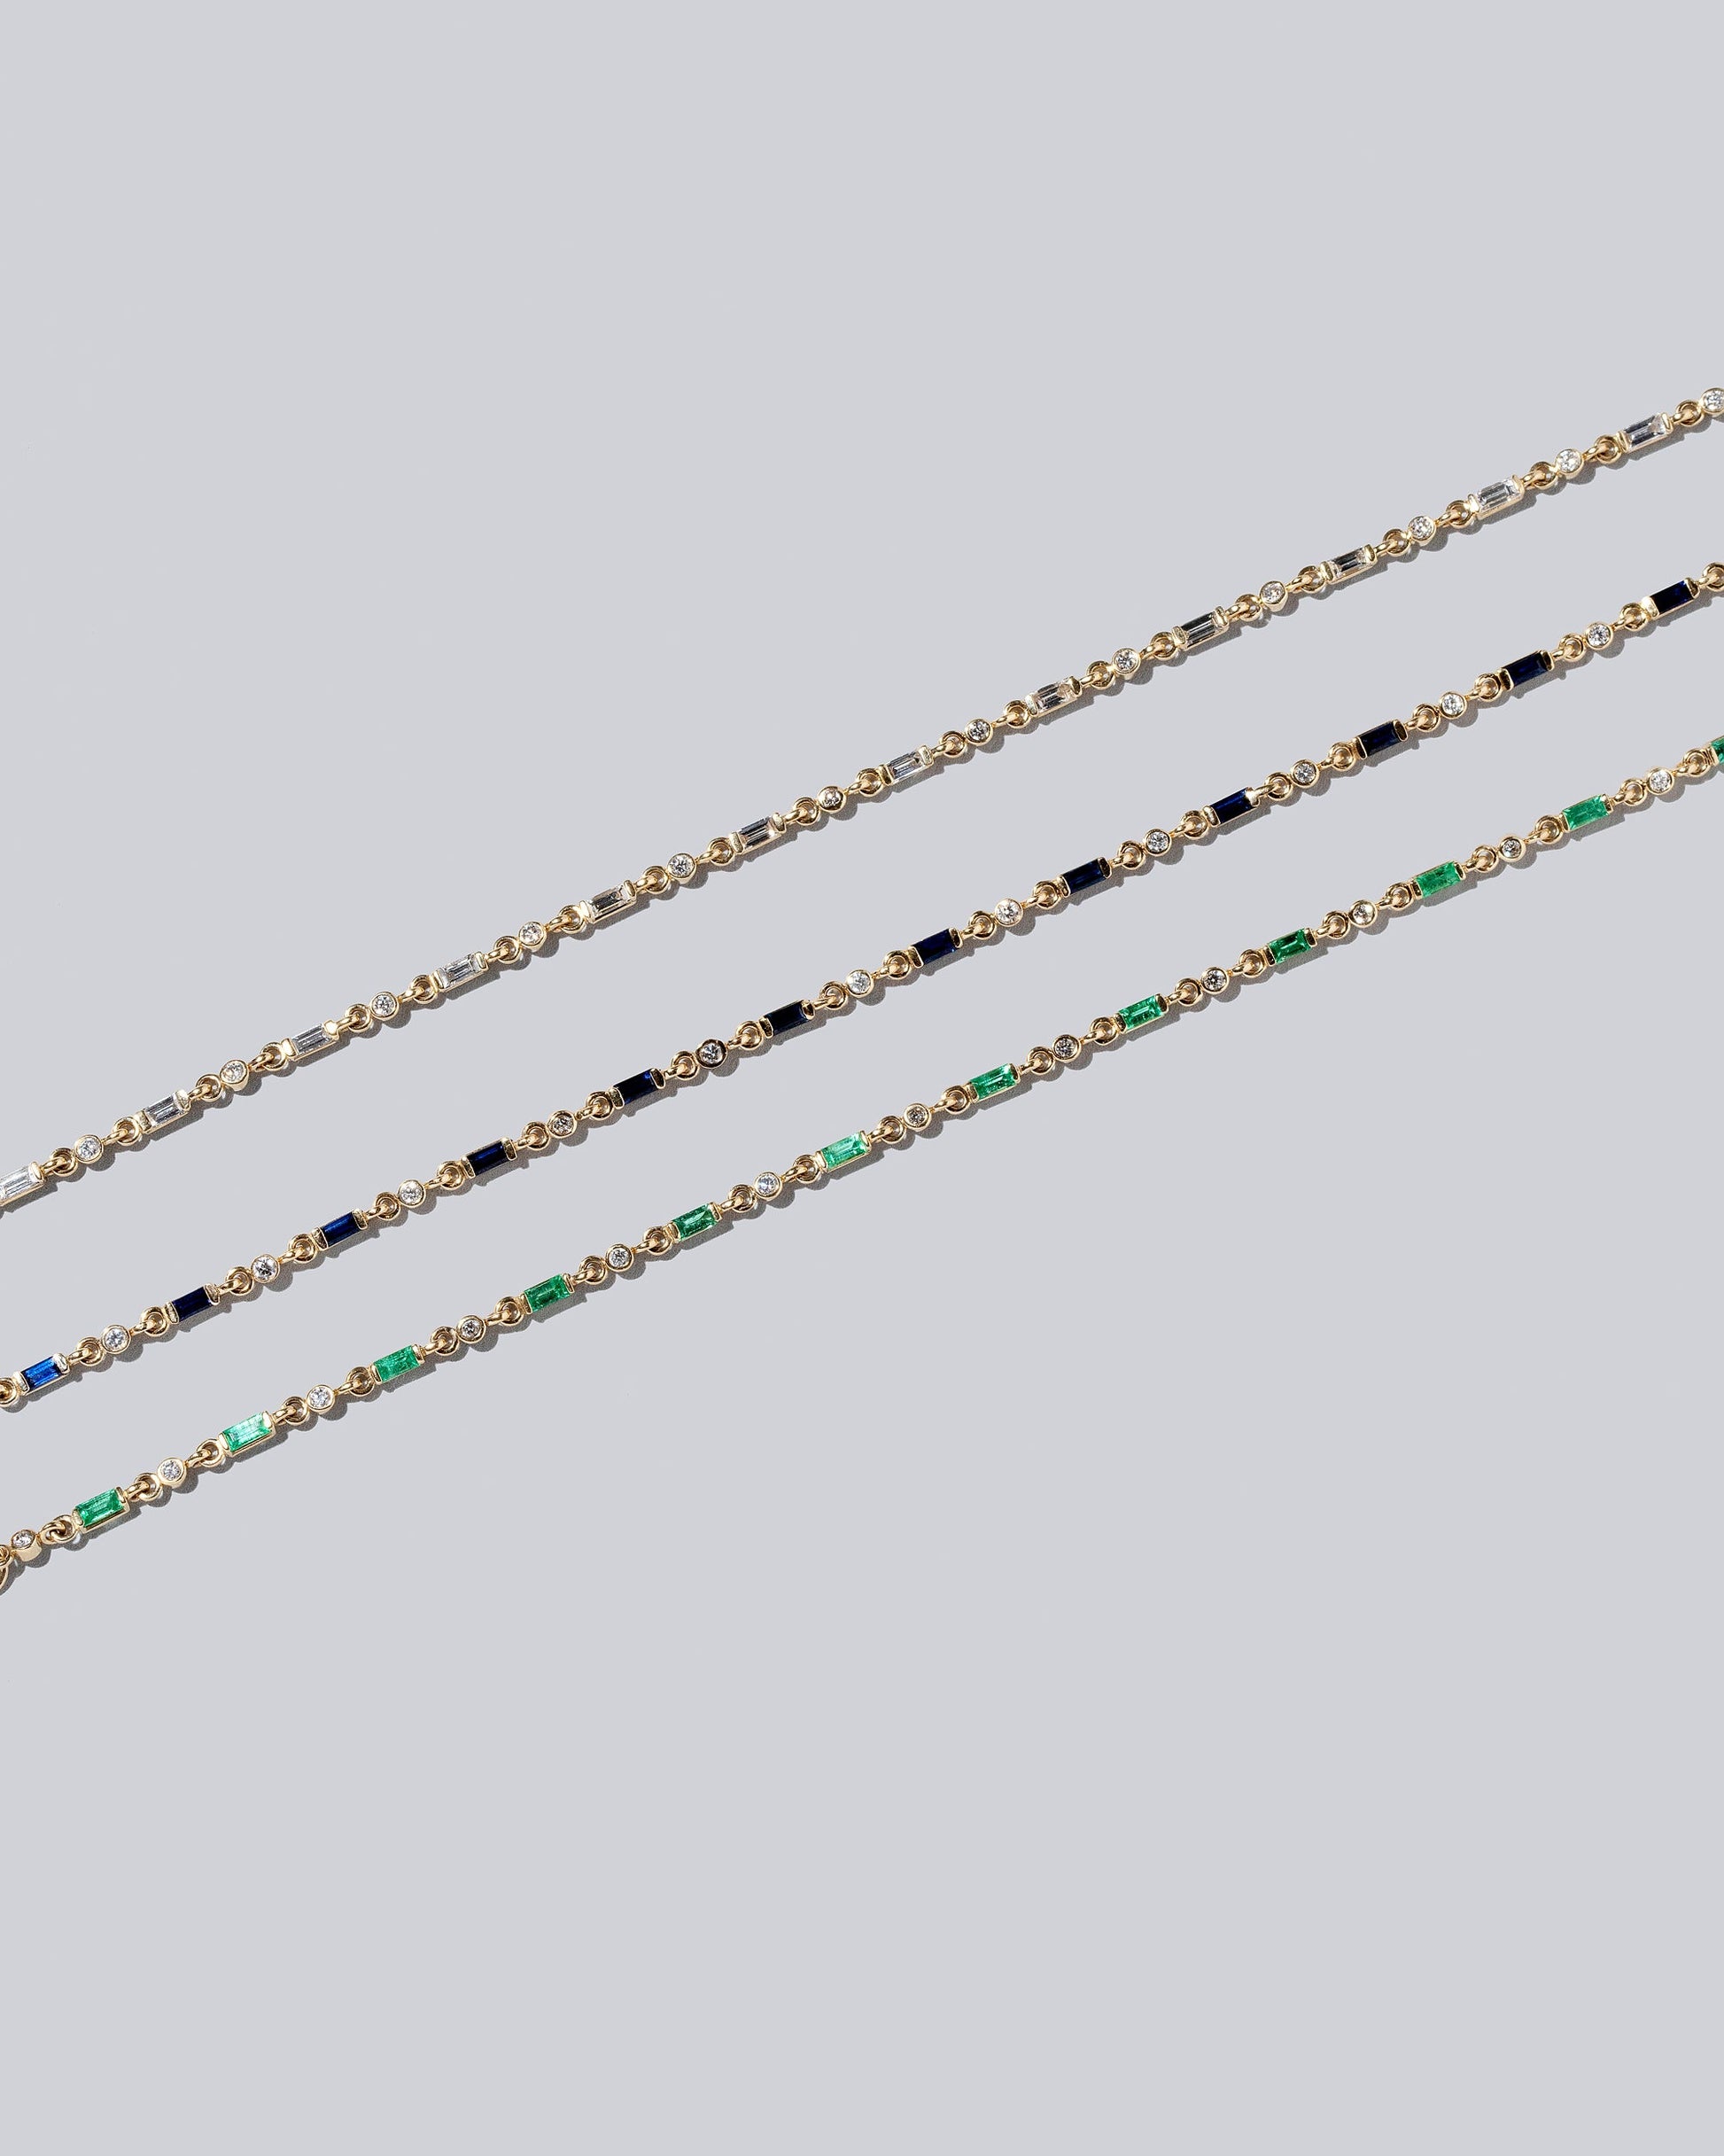 Group of White Diamond, Blue Sapphire and Emerald Full Building Blocks Bracelets on light color background.